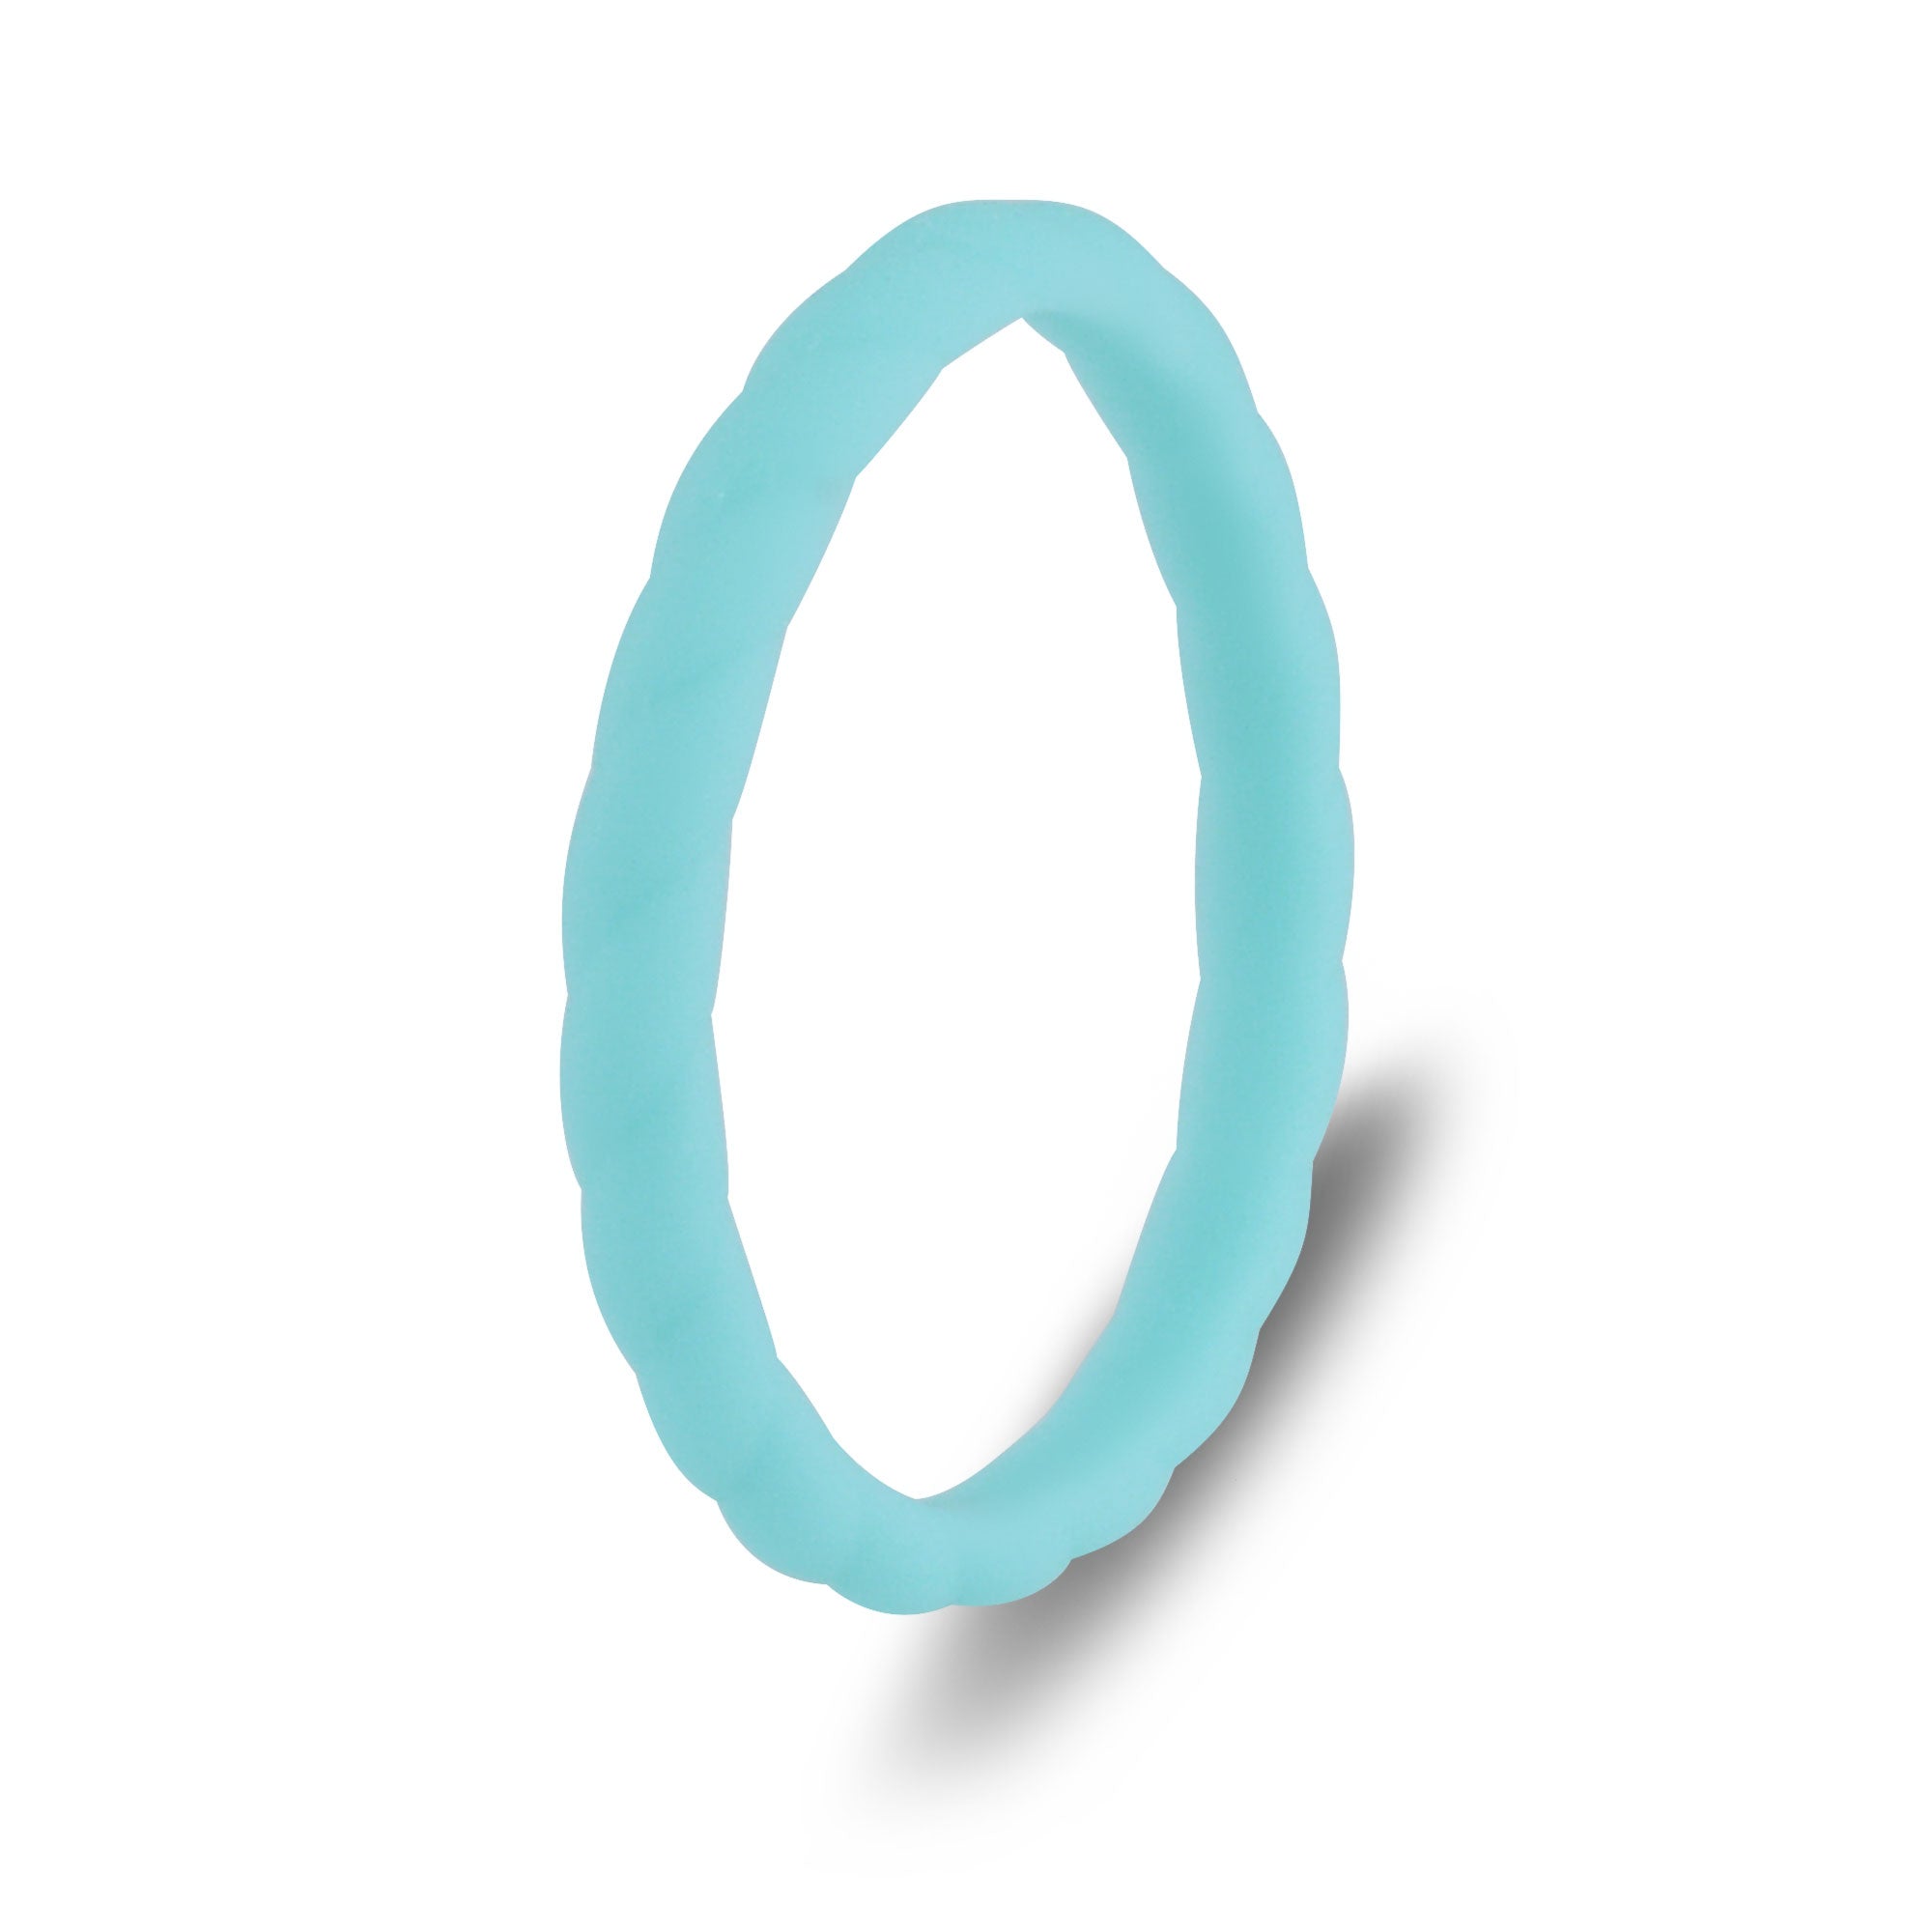 The Seafoam - Silicone Ring